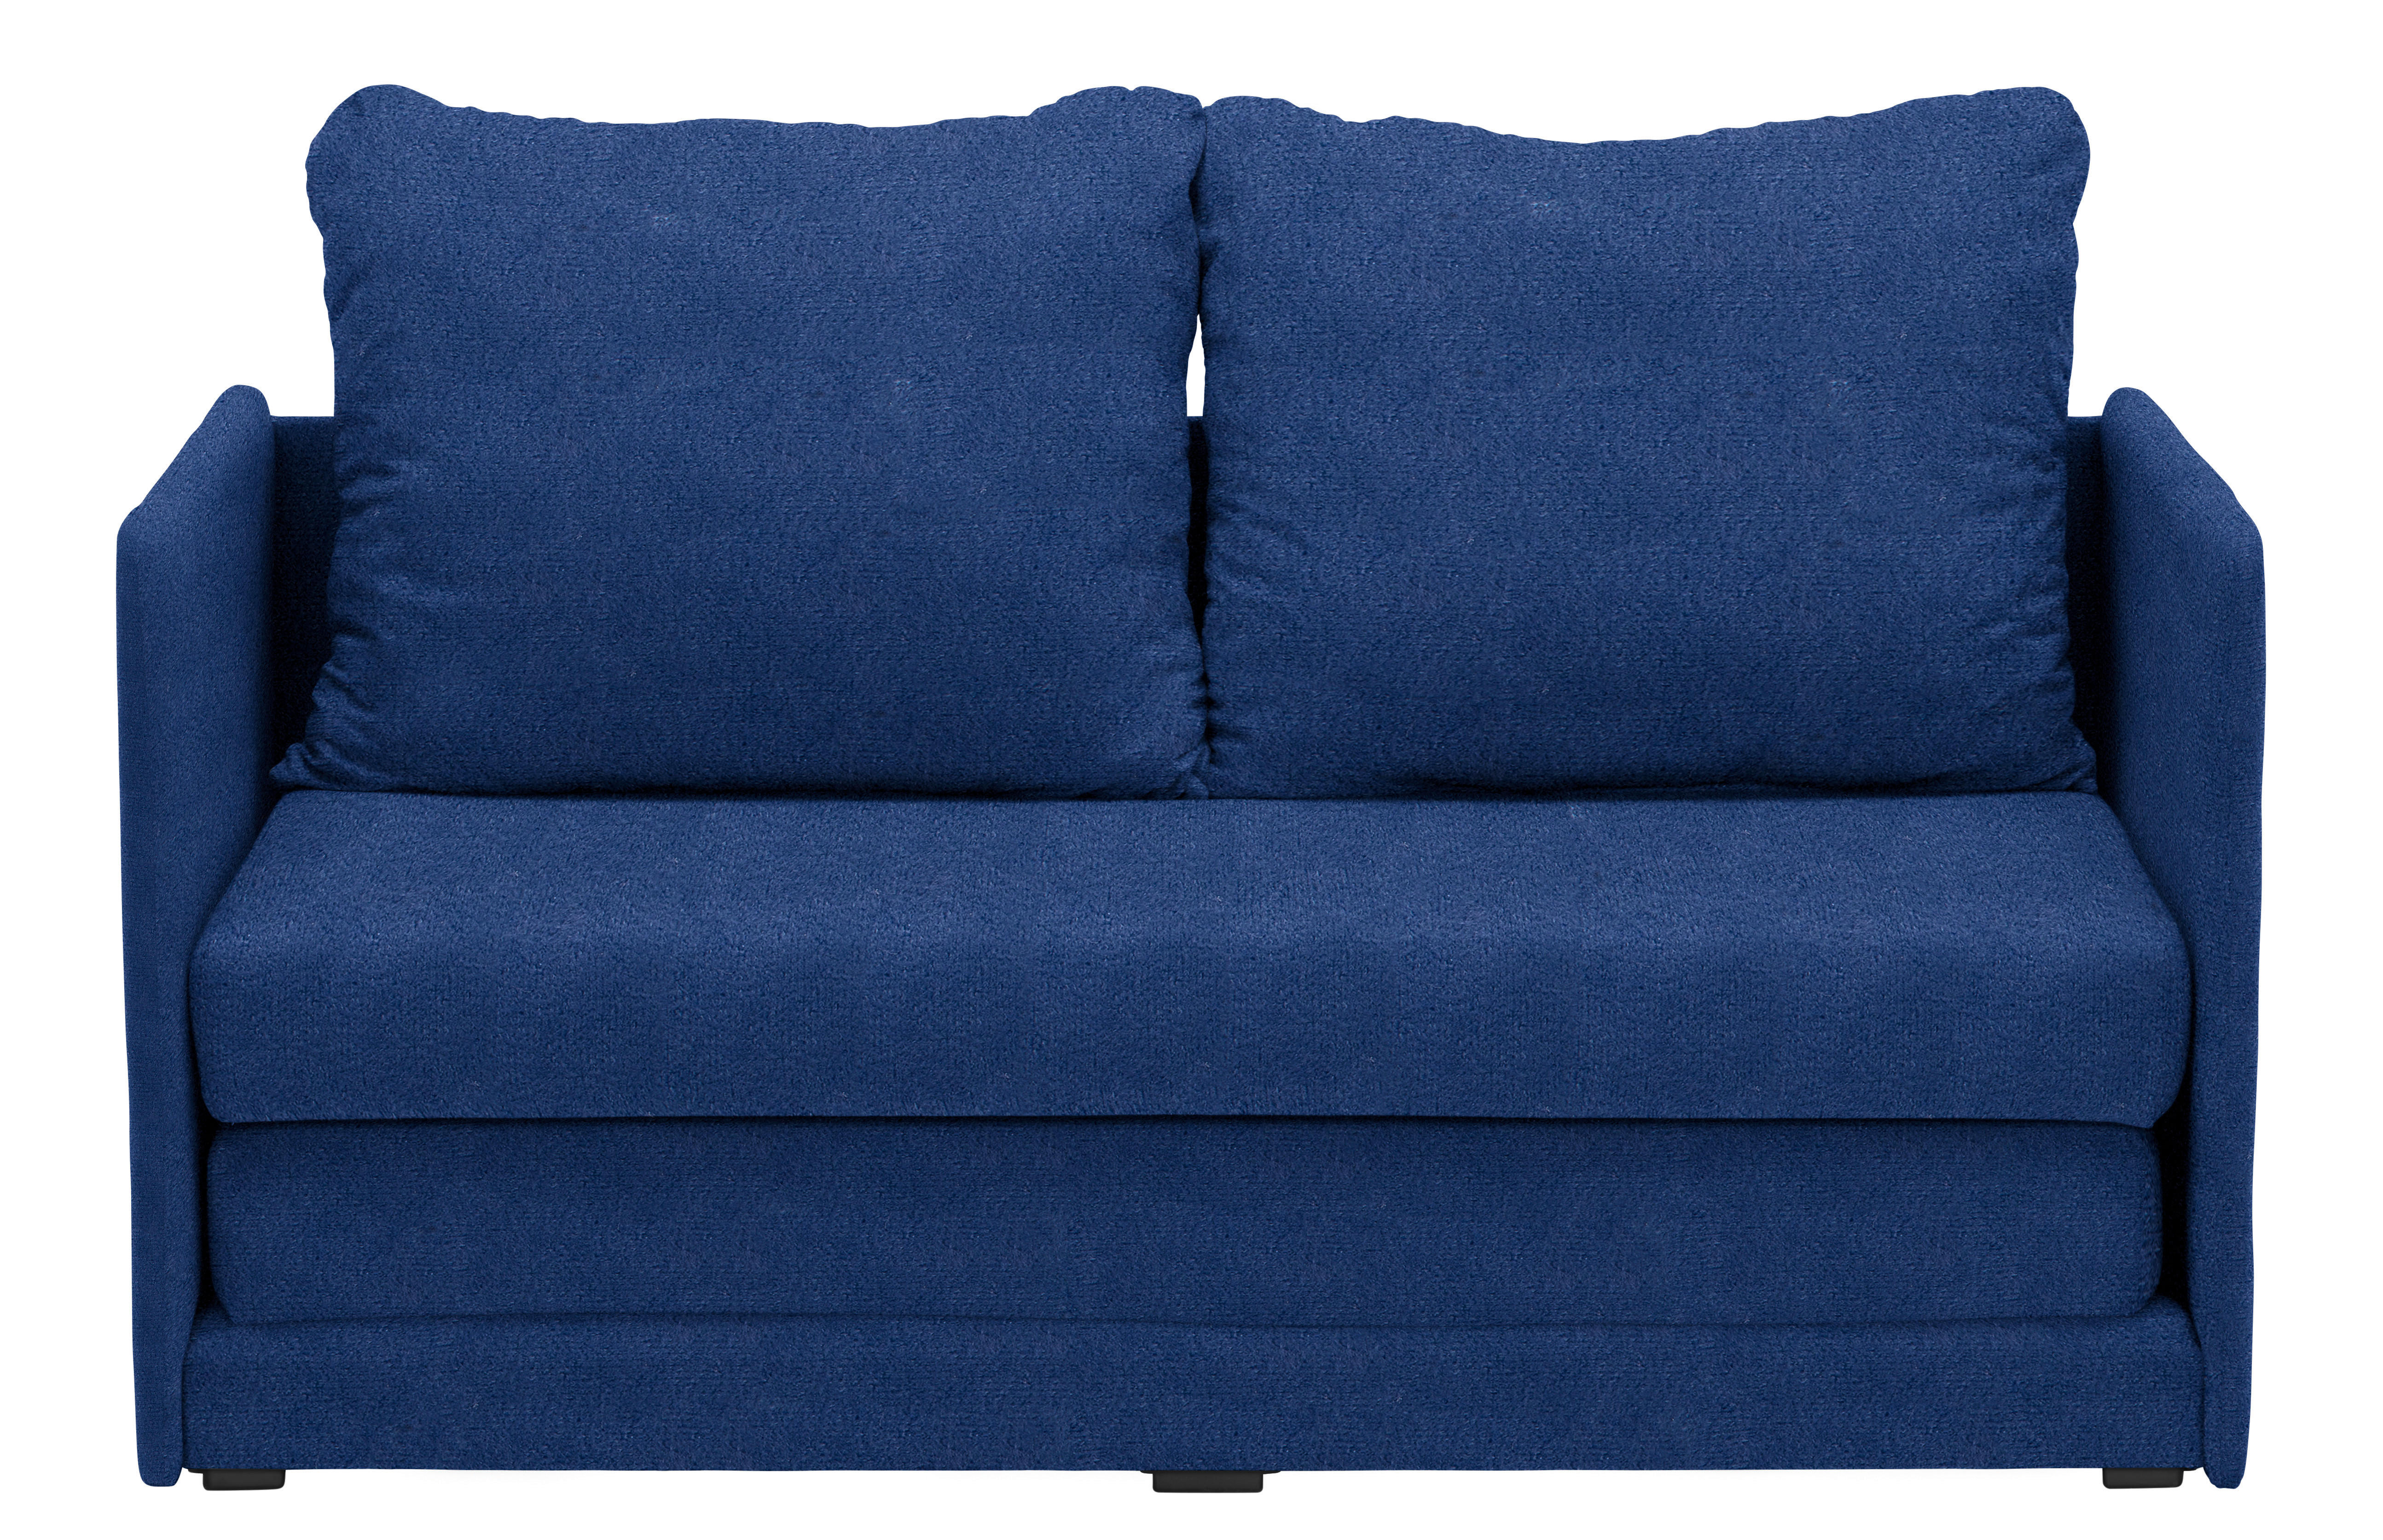 CANAPEA COPII ȘI TINERET in textil albastru  - albastru, Lifestyle, textil (116/69/64cm) - Carryhome